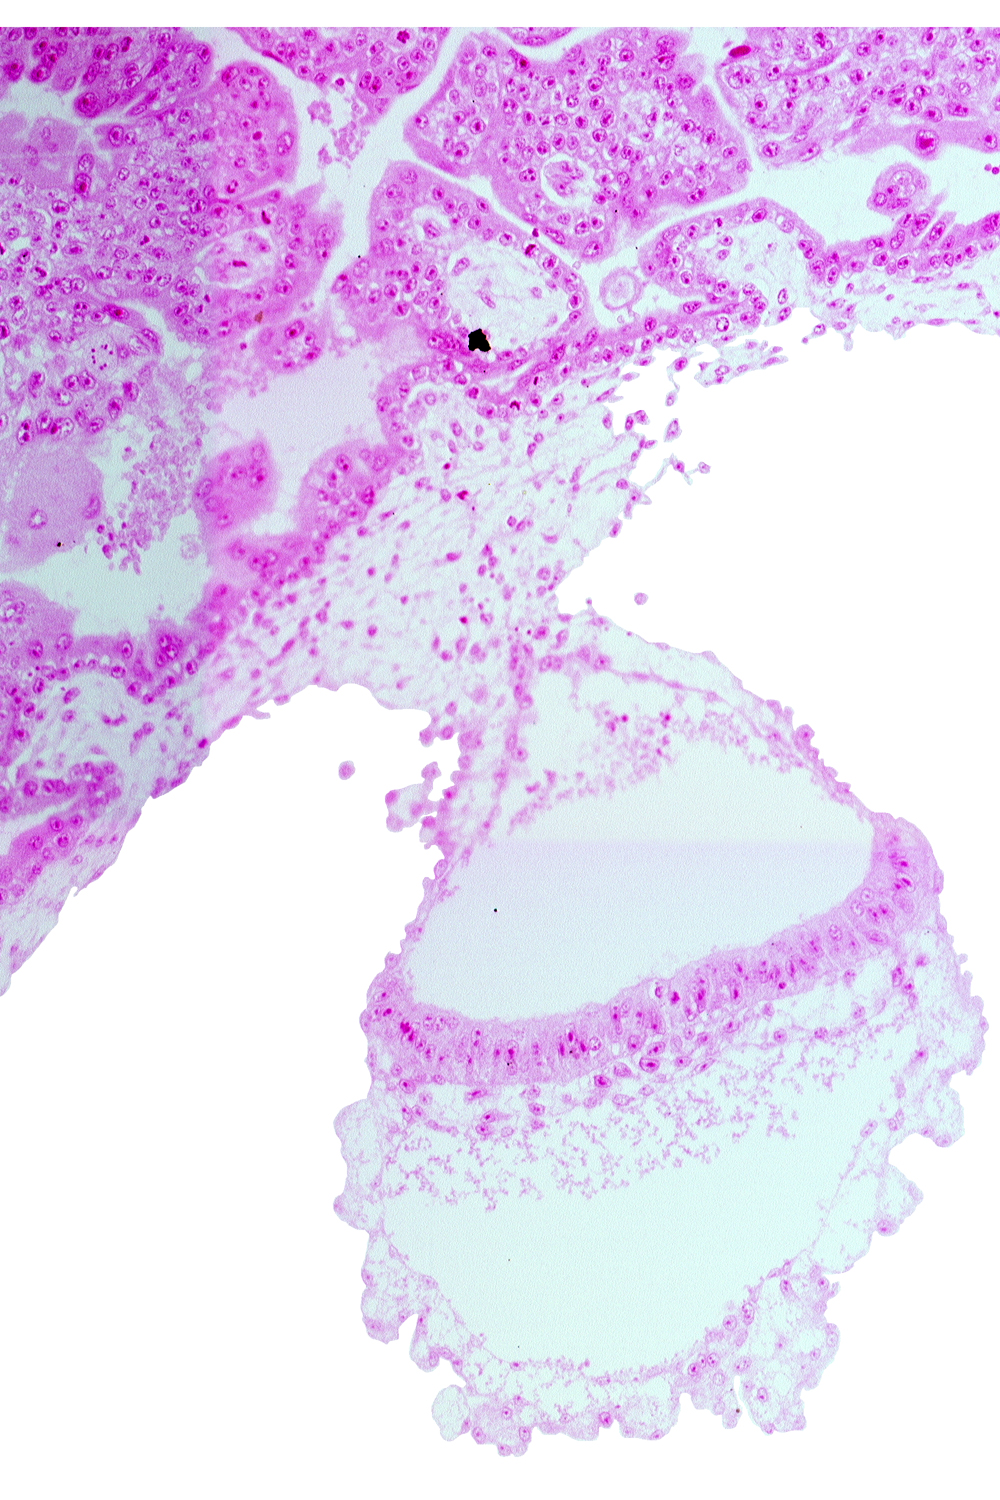 amniotic mesenchyme, connecting stalk, gastrulation (primitive) node, head mesenchyme, hypoblast, lateral edge of embryonic disc, mesothelium